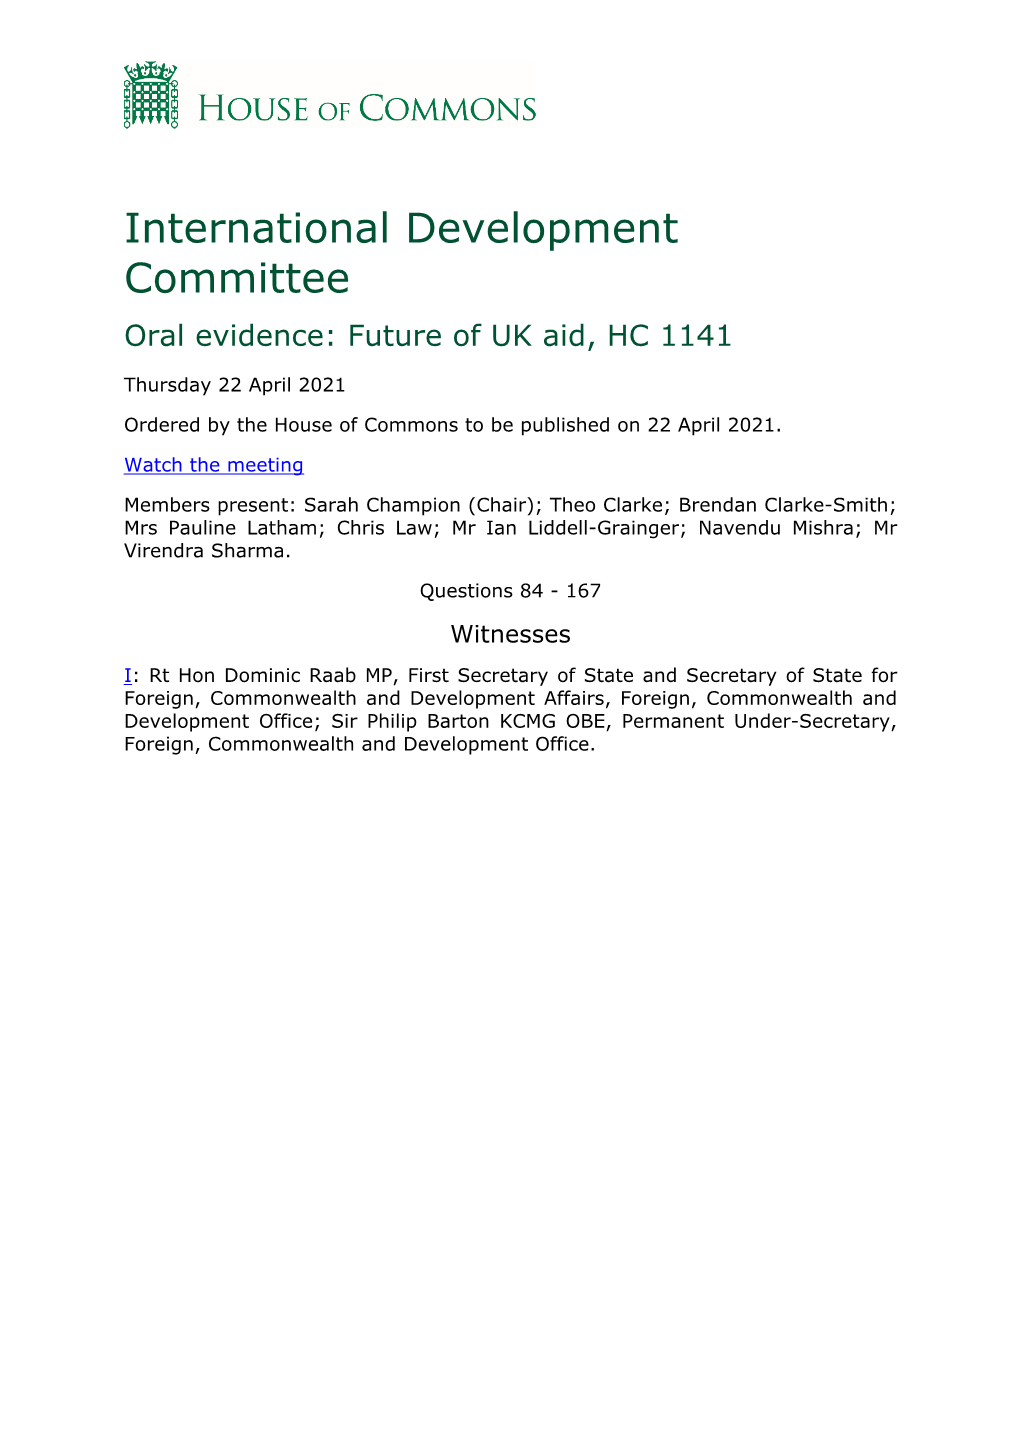 International Development Committee Oral Evidence: Future of UK Aid, HC 1141